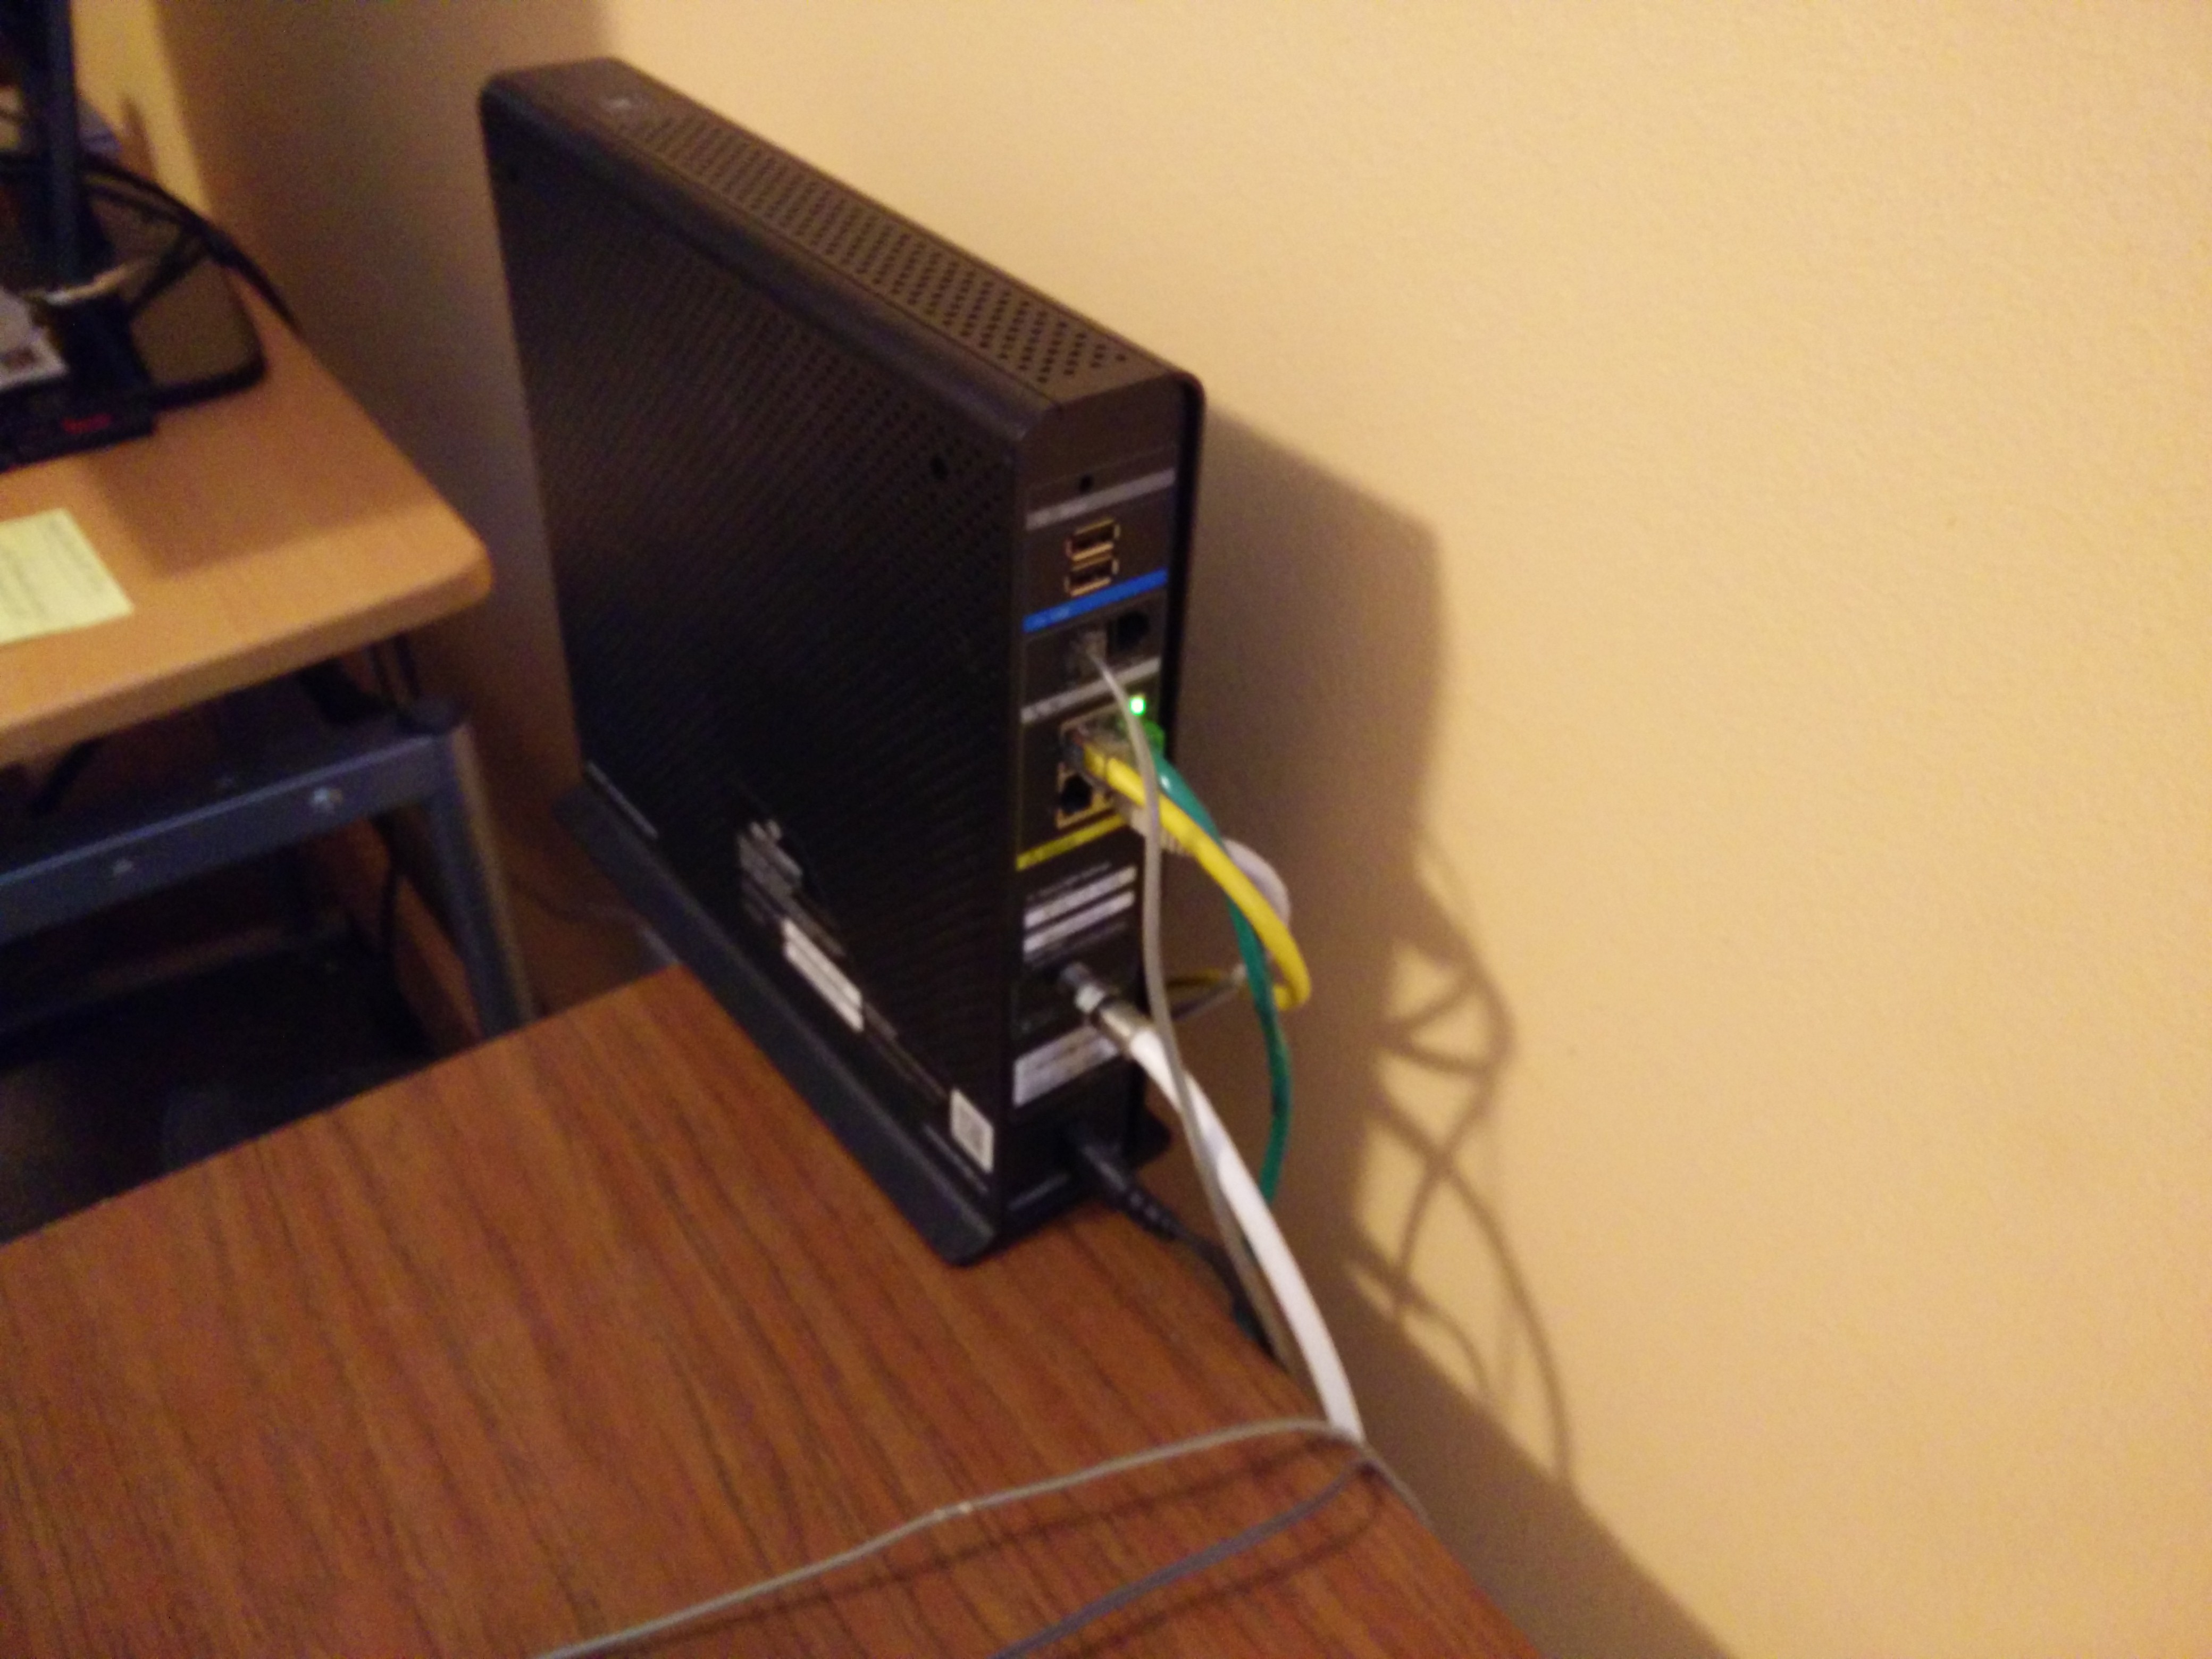 Comcast router back